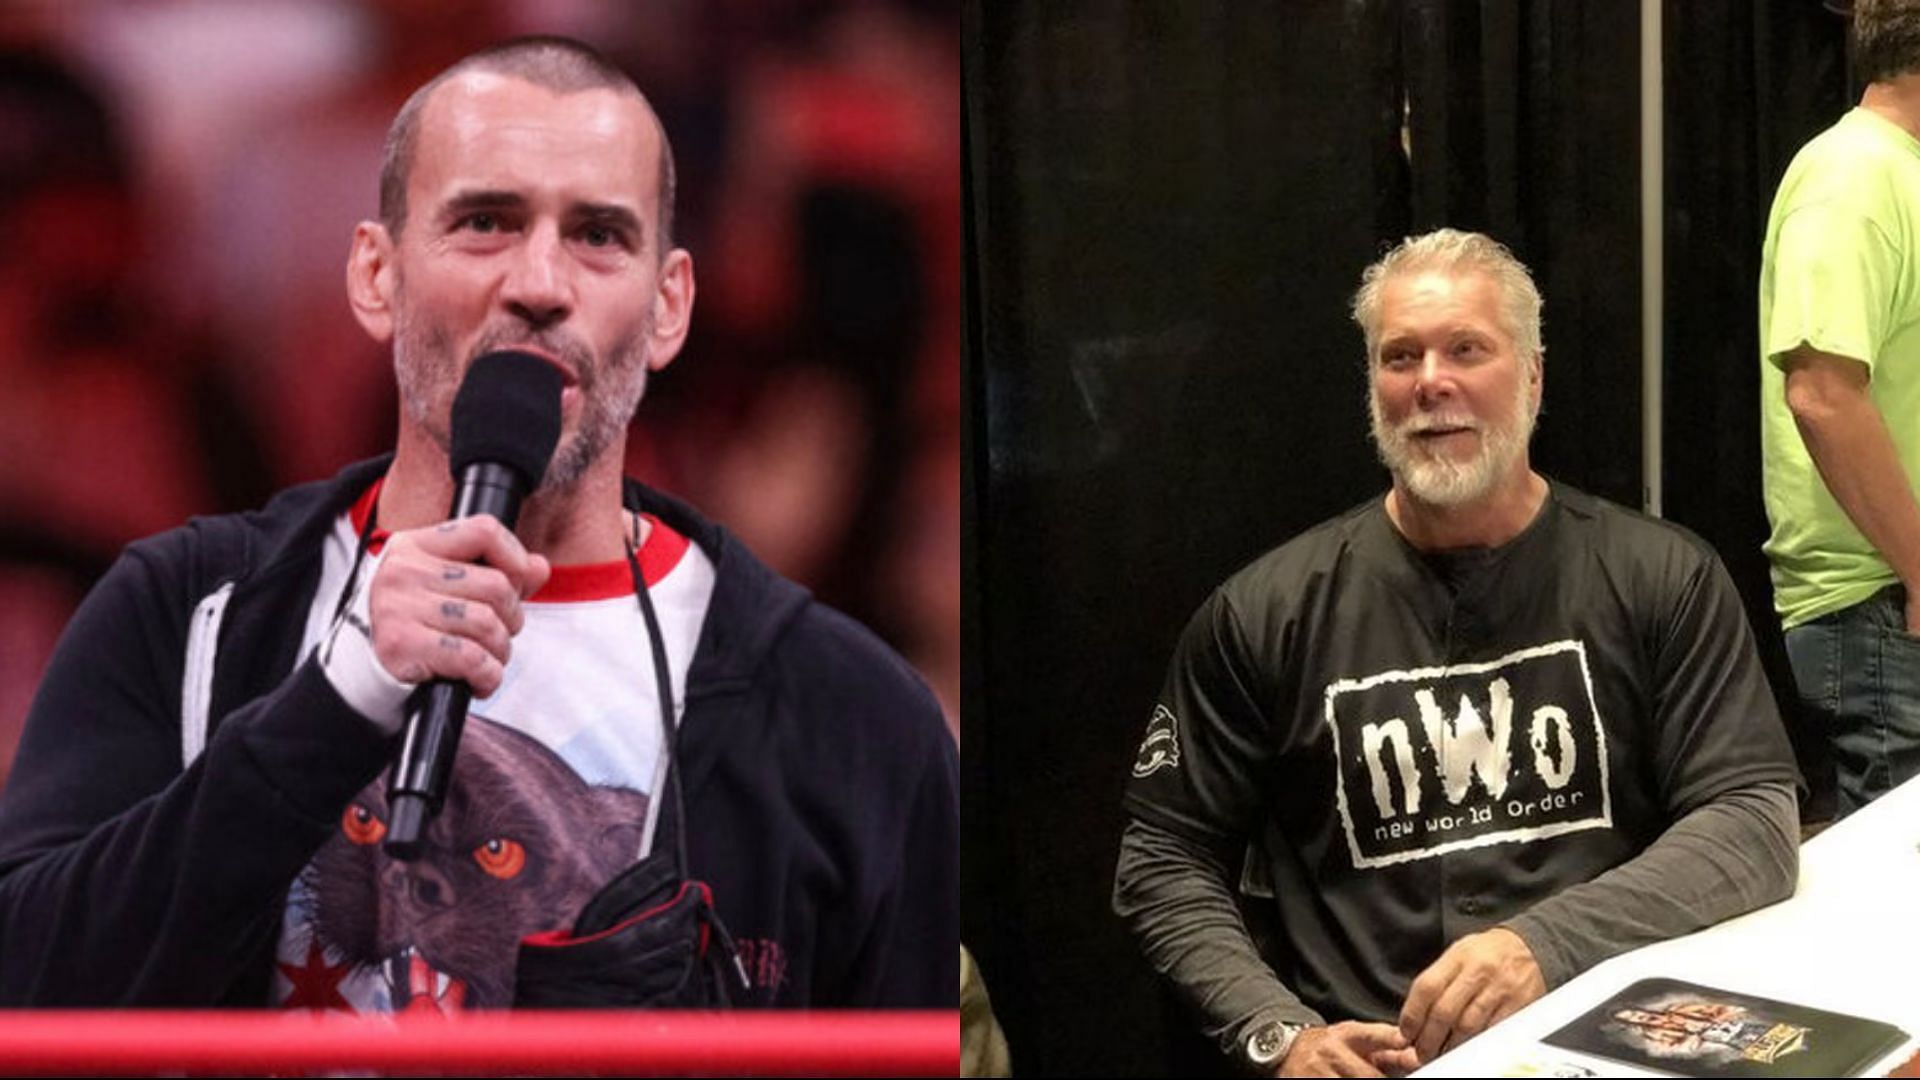 CM Punk and Kevin Nash are former WWE superstars